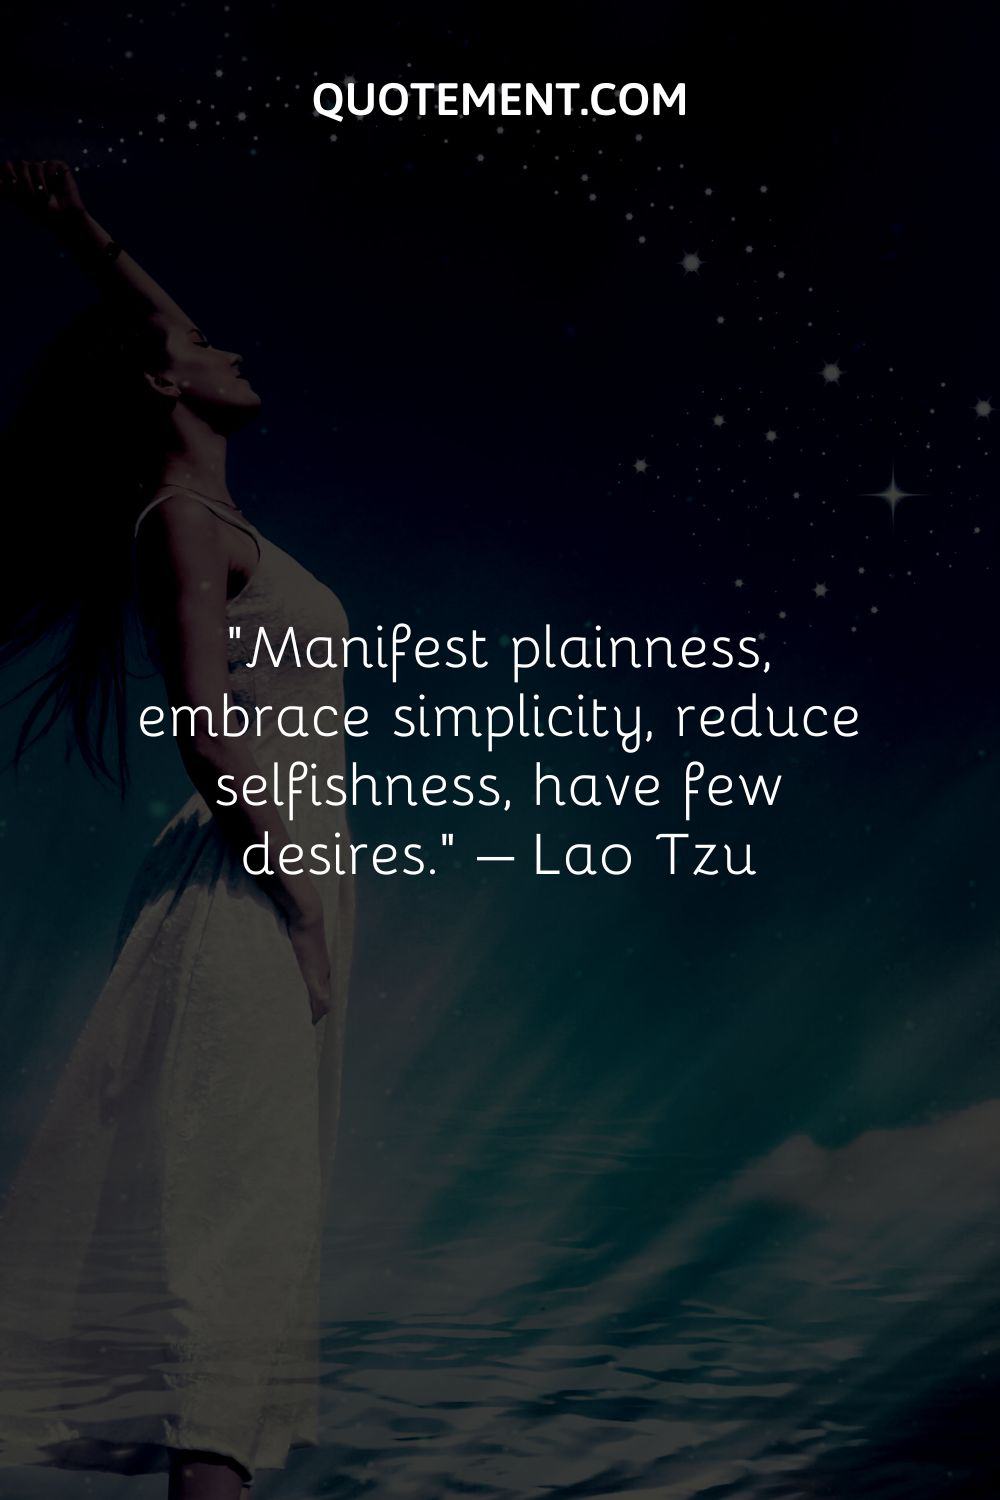 Manifest plainness, embrace simplicity, reduce selfishness, have few desires